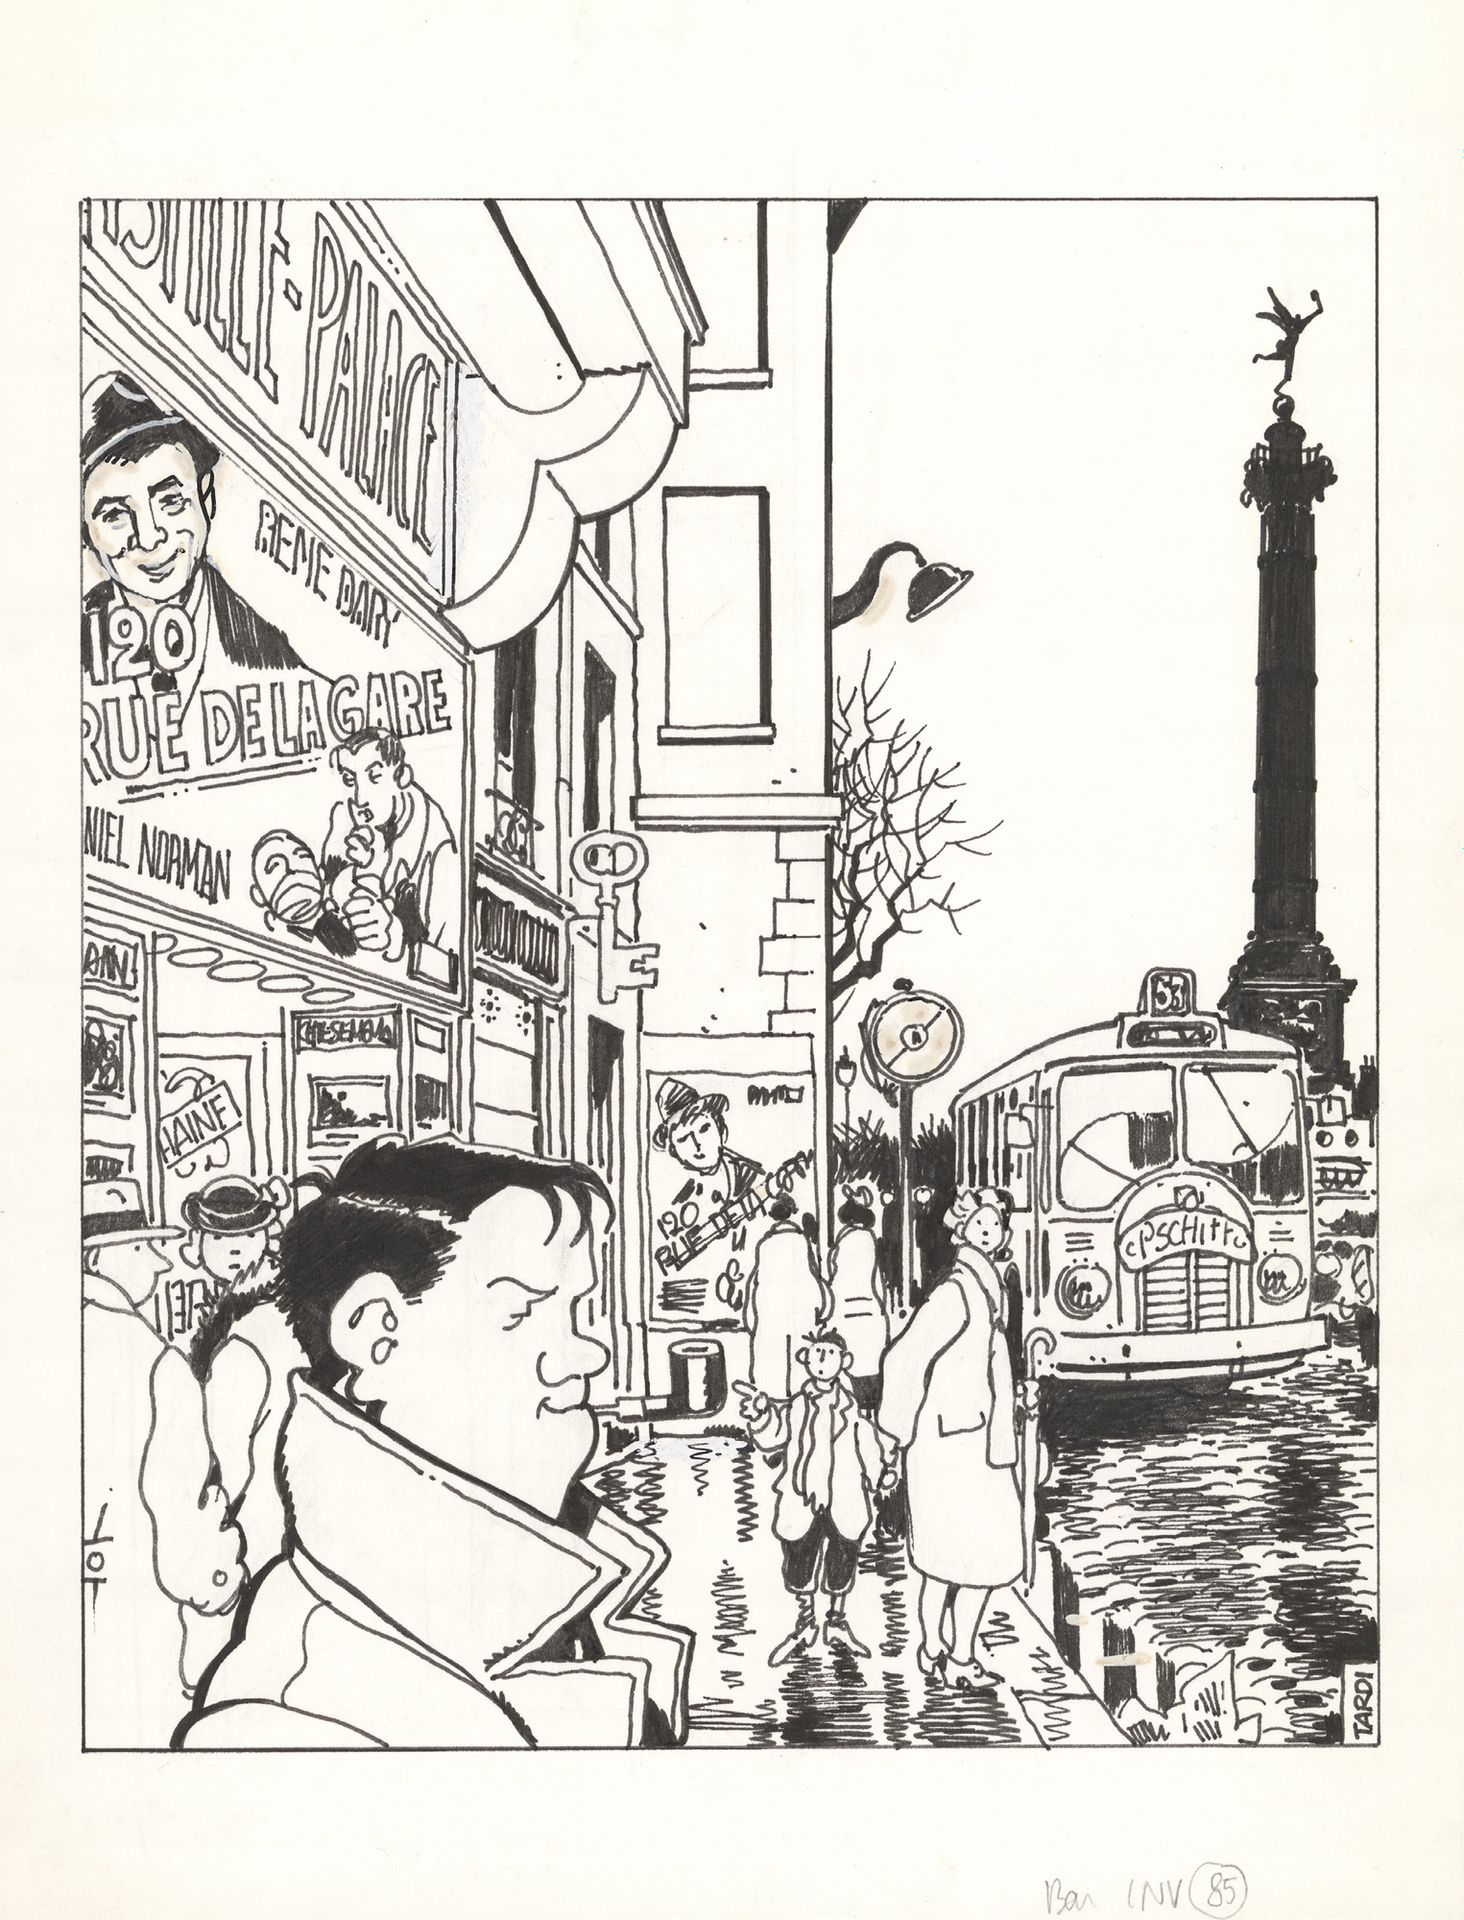 Jacques TARDI (né en 1946) Nestor Burma - 120 rue de la Gare
Tusche auf Papier f&hellip;